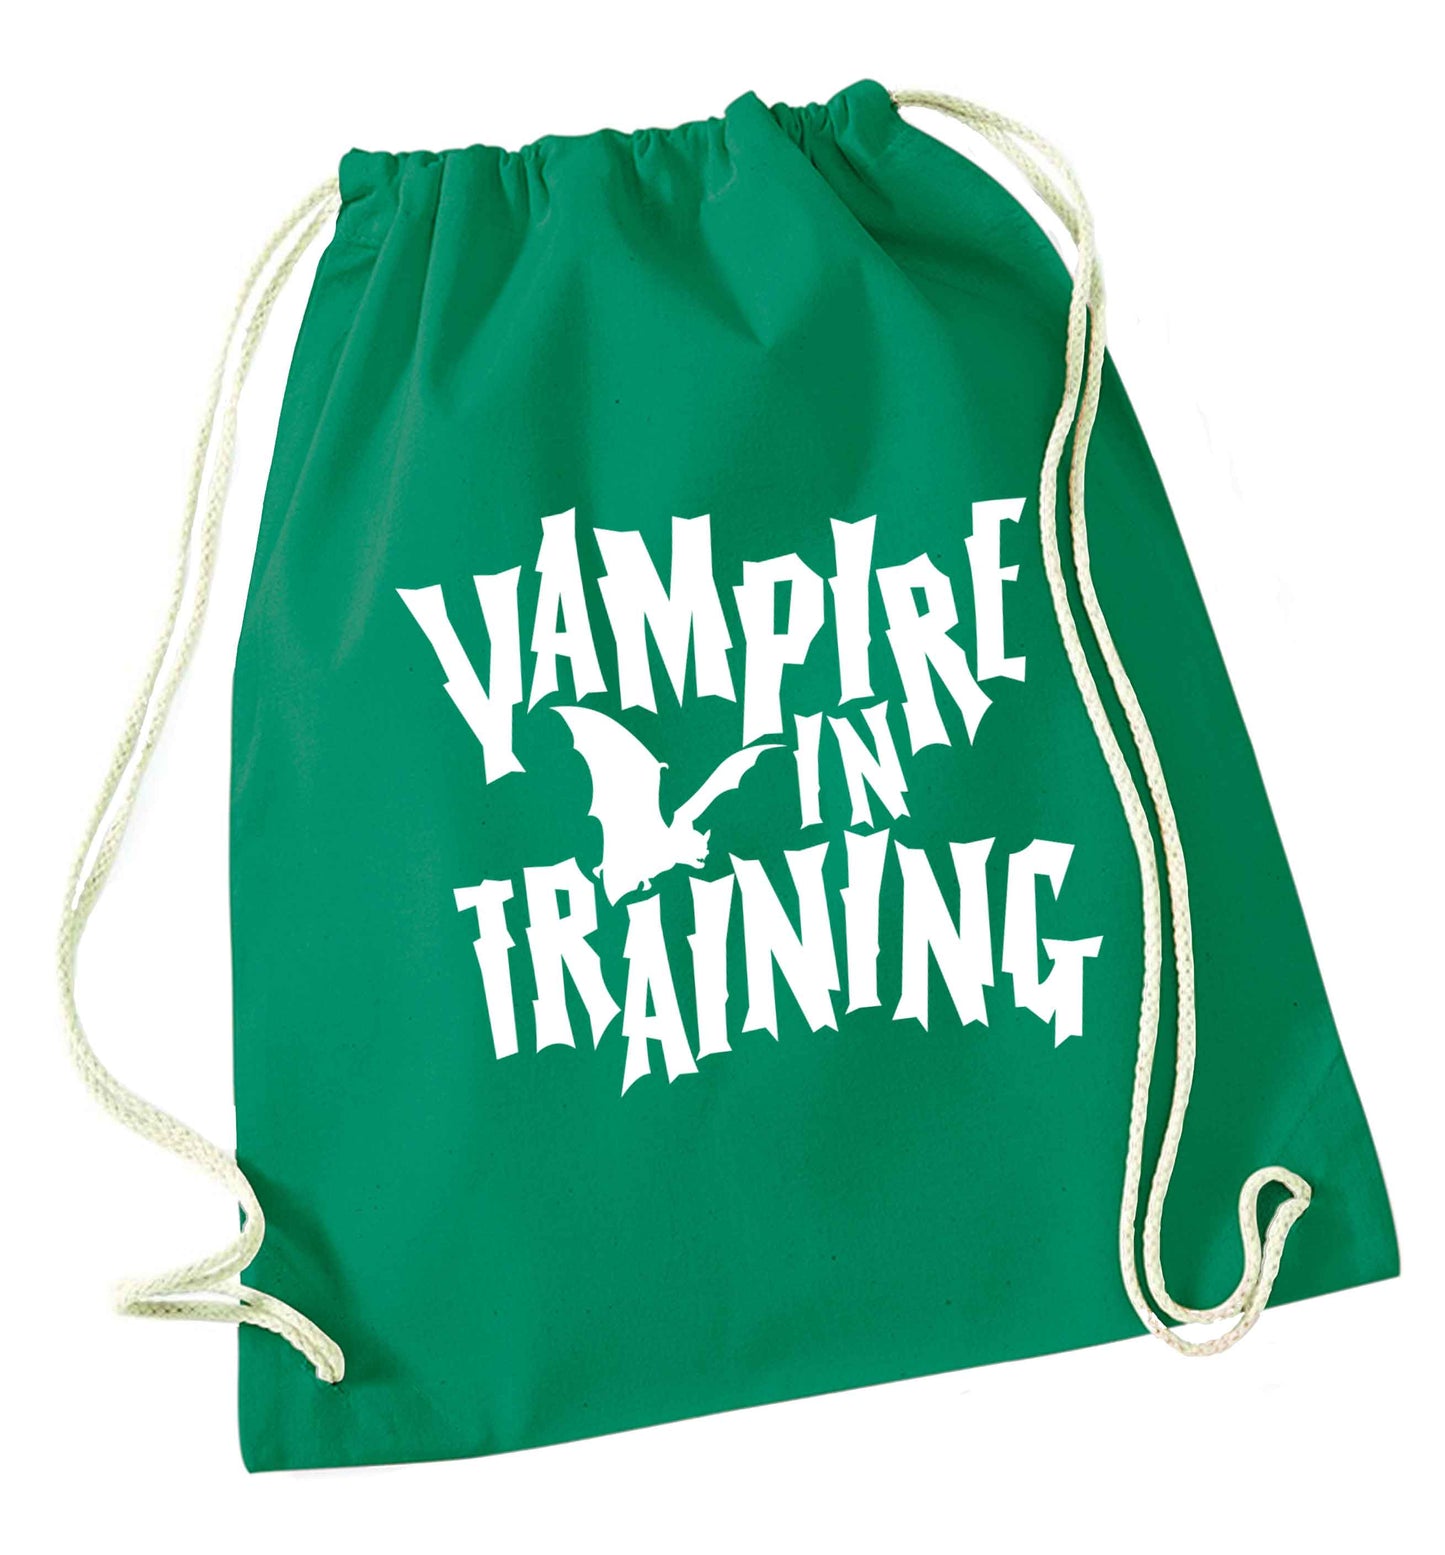 Vampire in training green drawstring bag